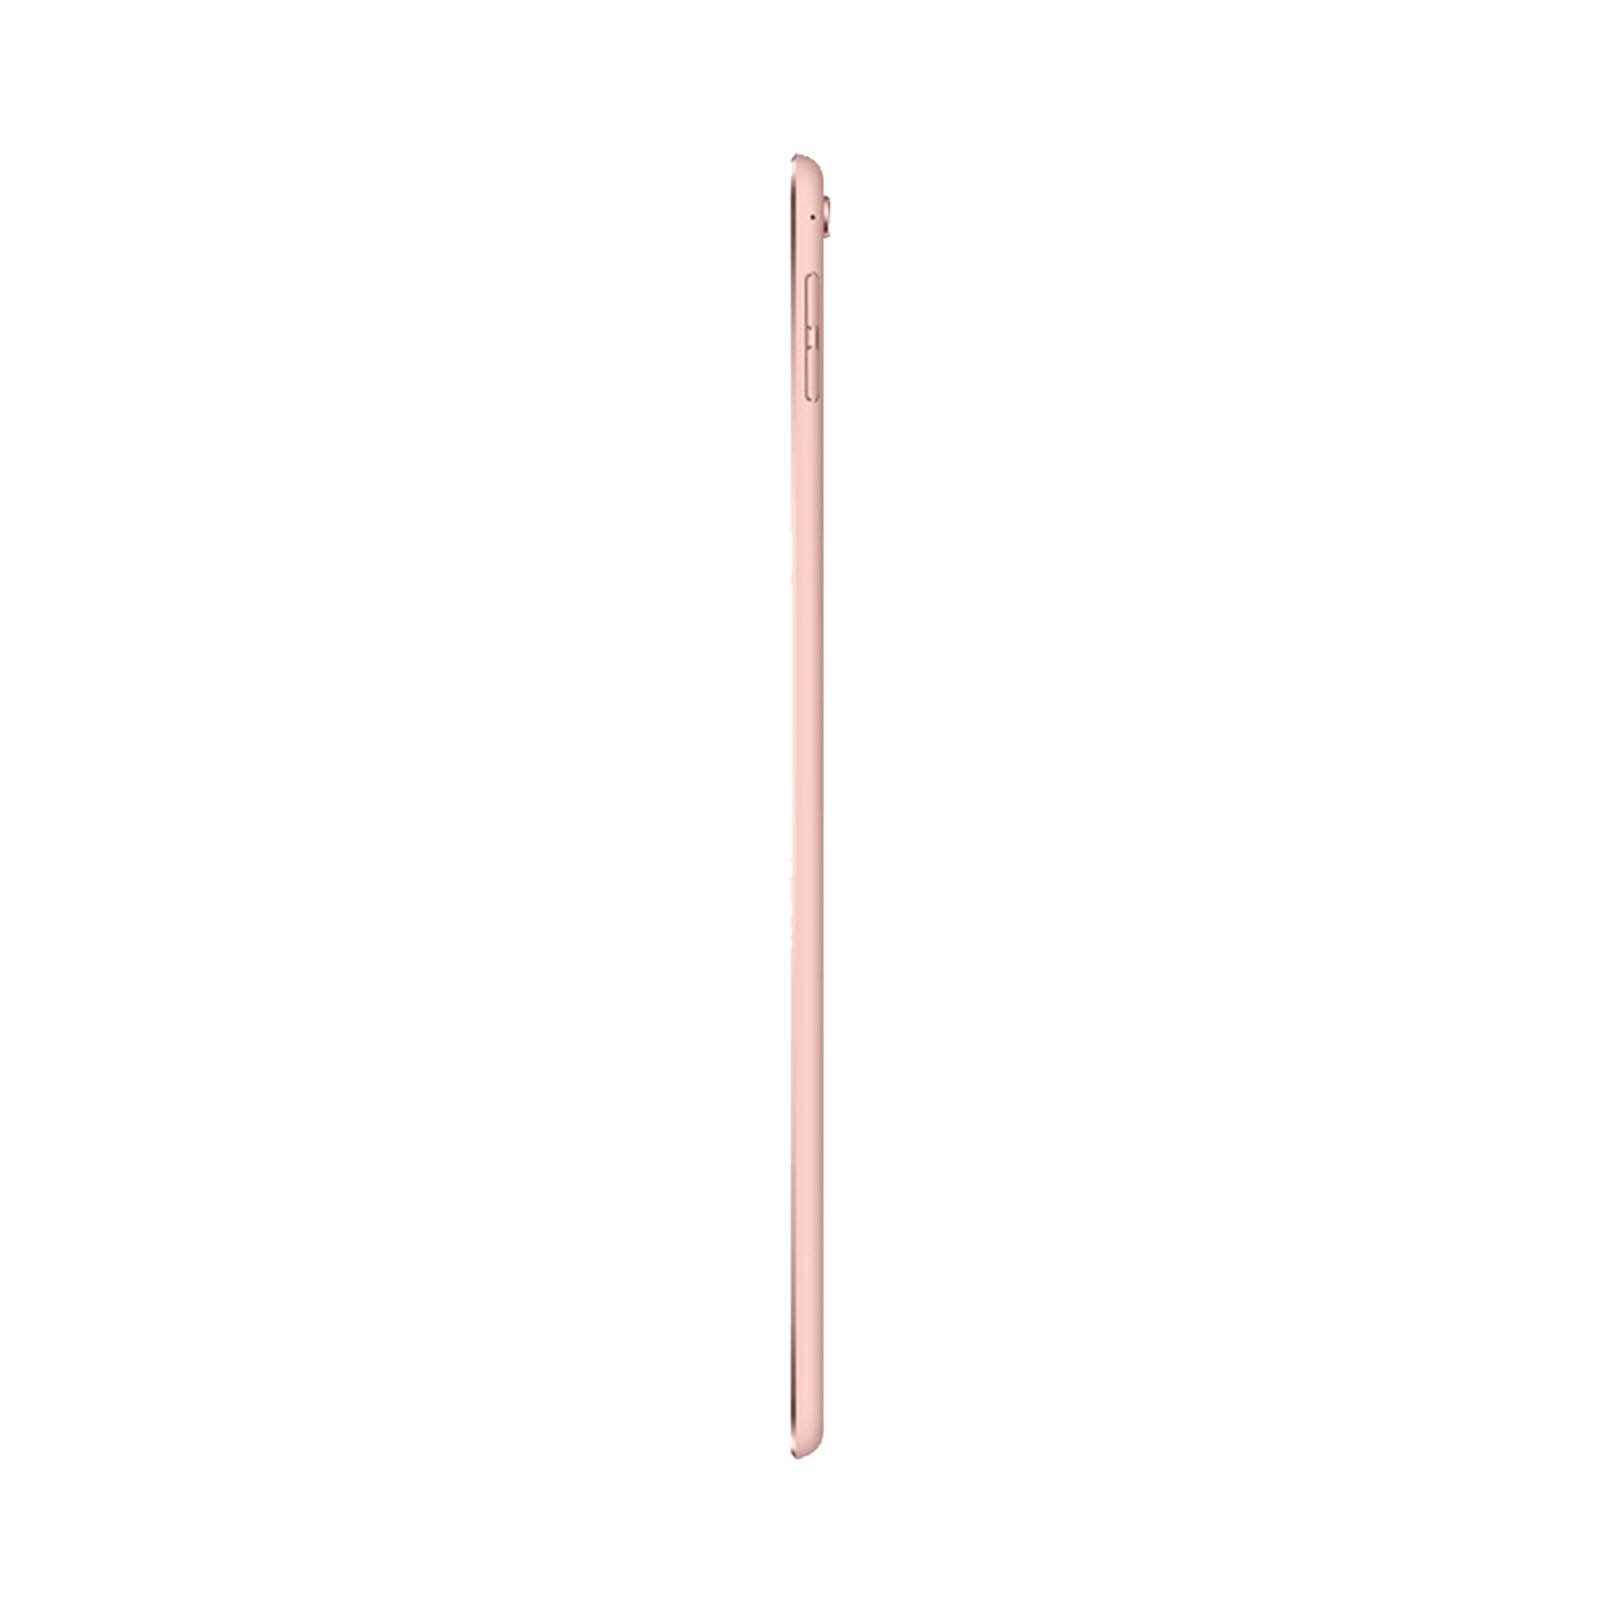 iPad Pro 9.7 Inch 128GB Rose Gold Pristine - Unlocked